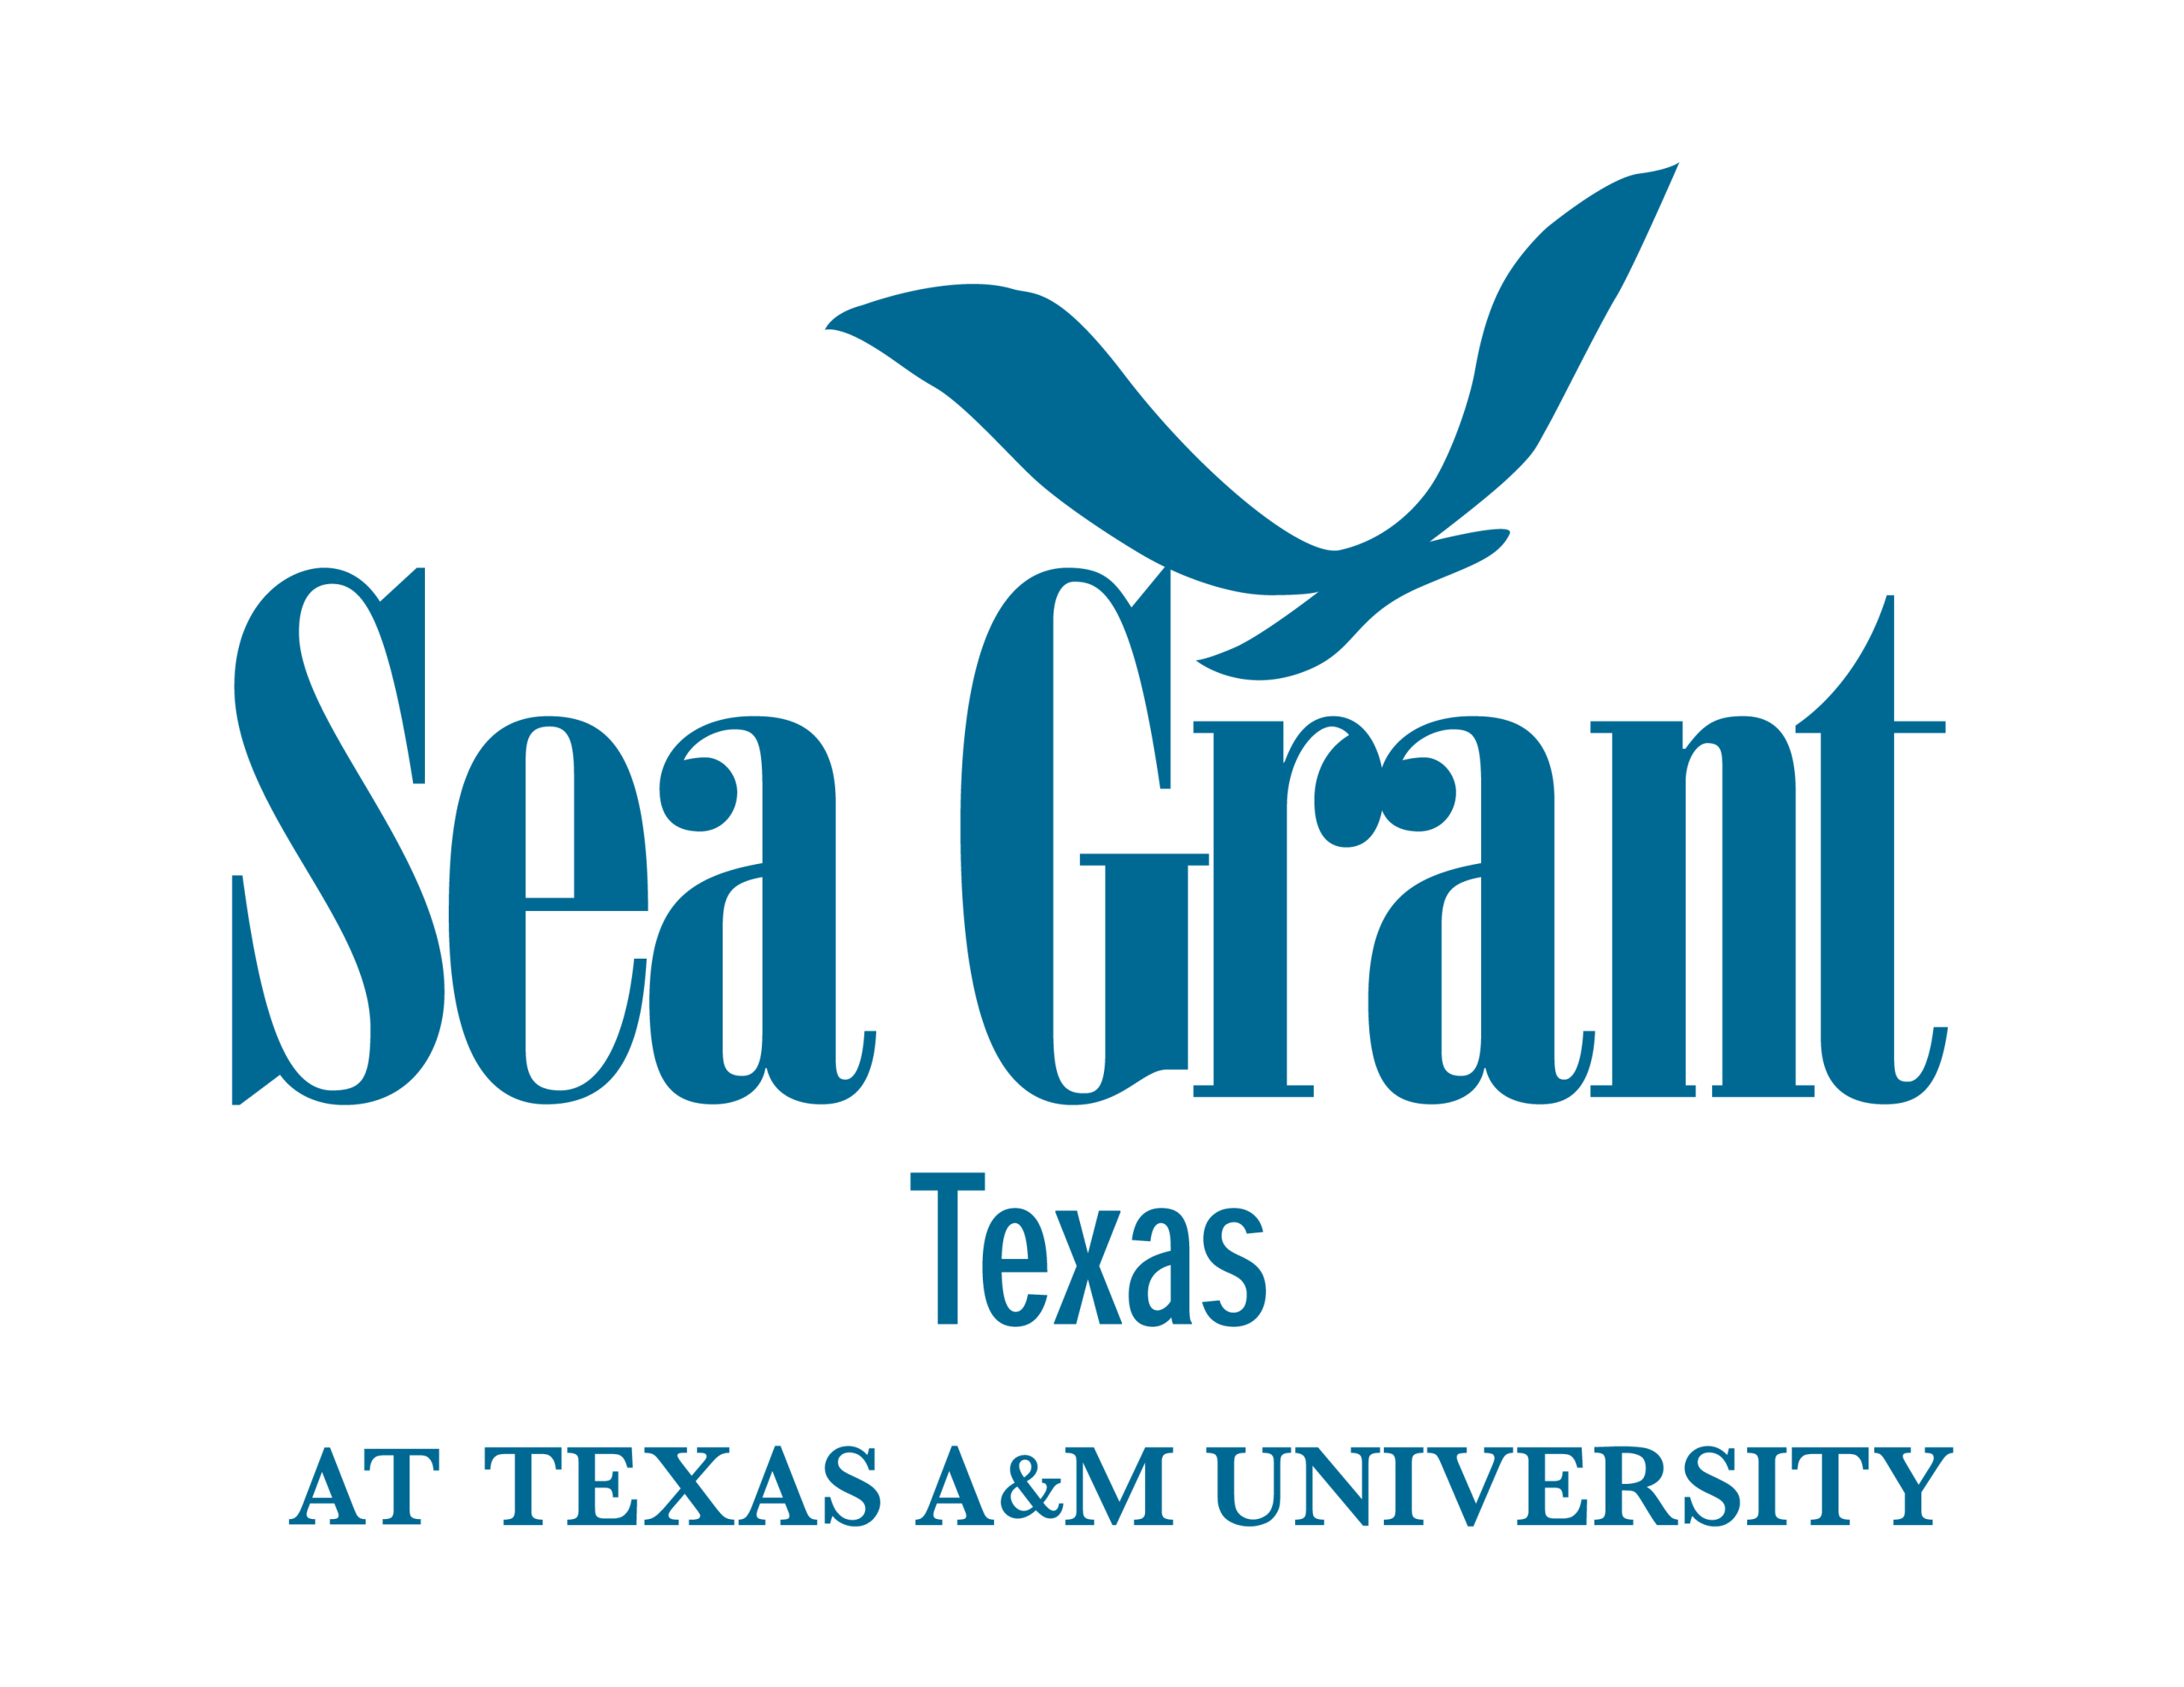 Sea Grant Texas at Texas A&M University